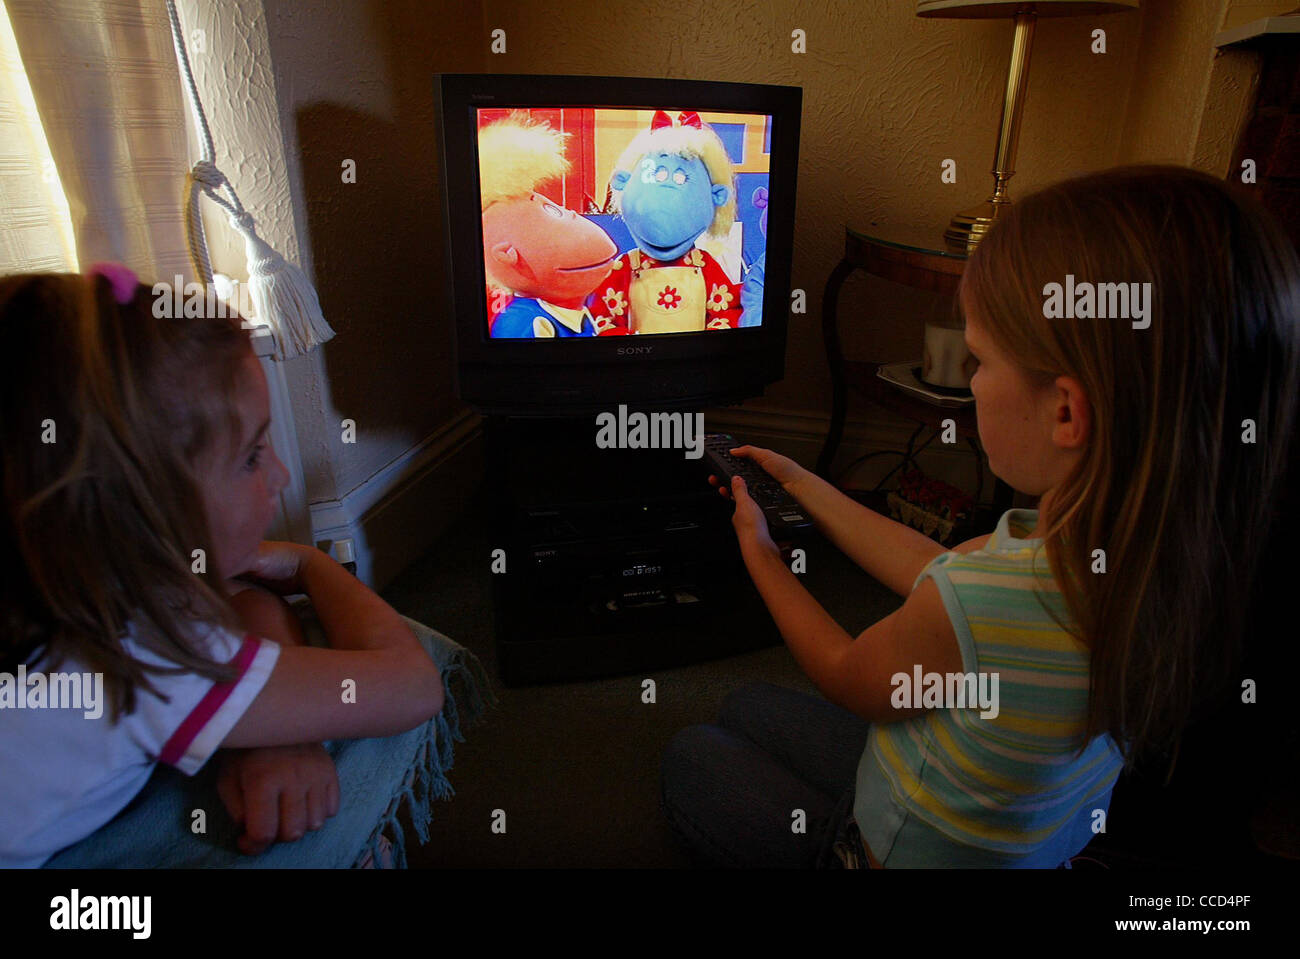 Children watching television. Stock Photo